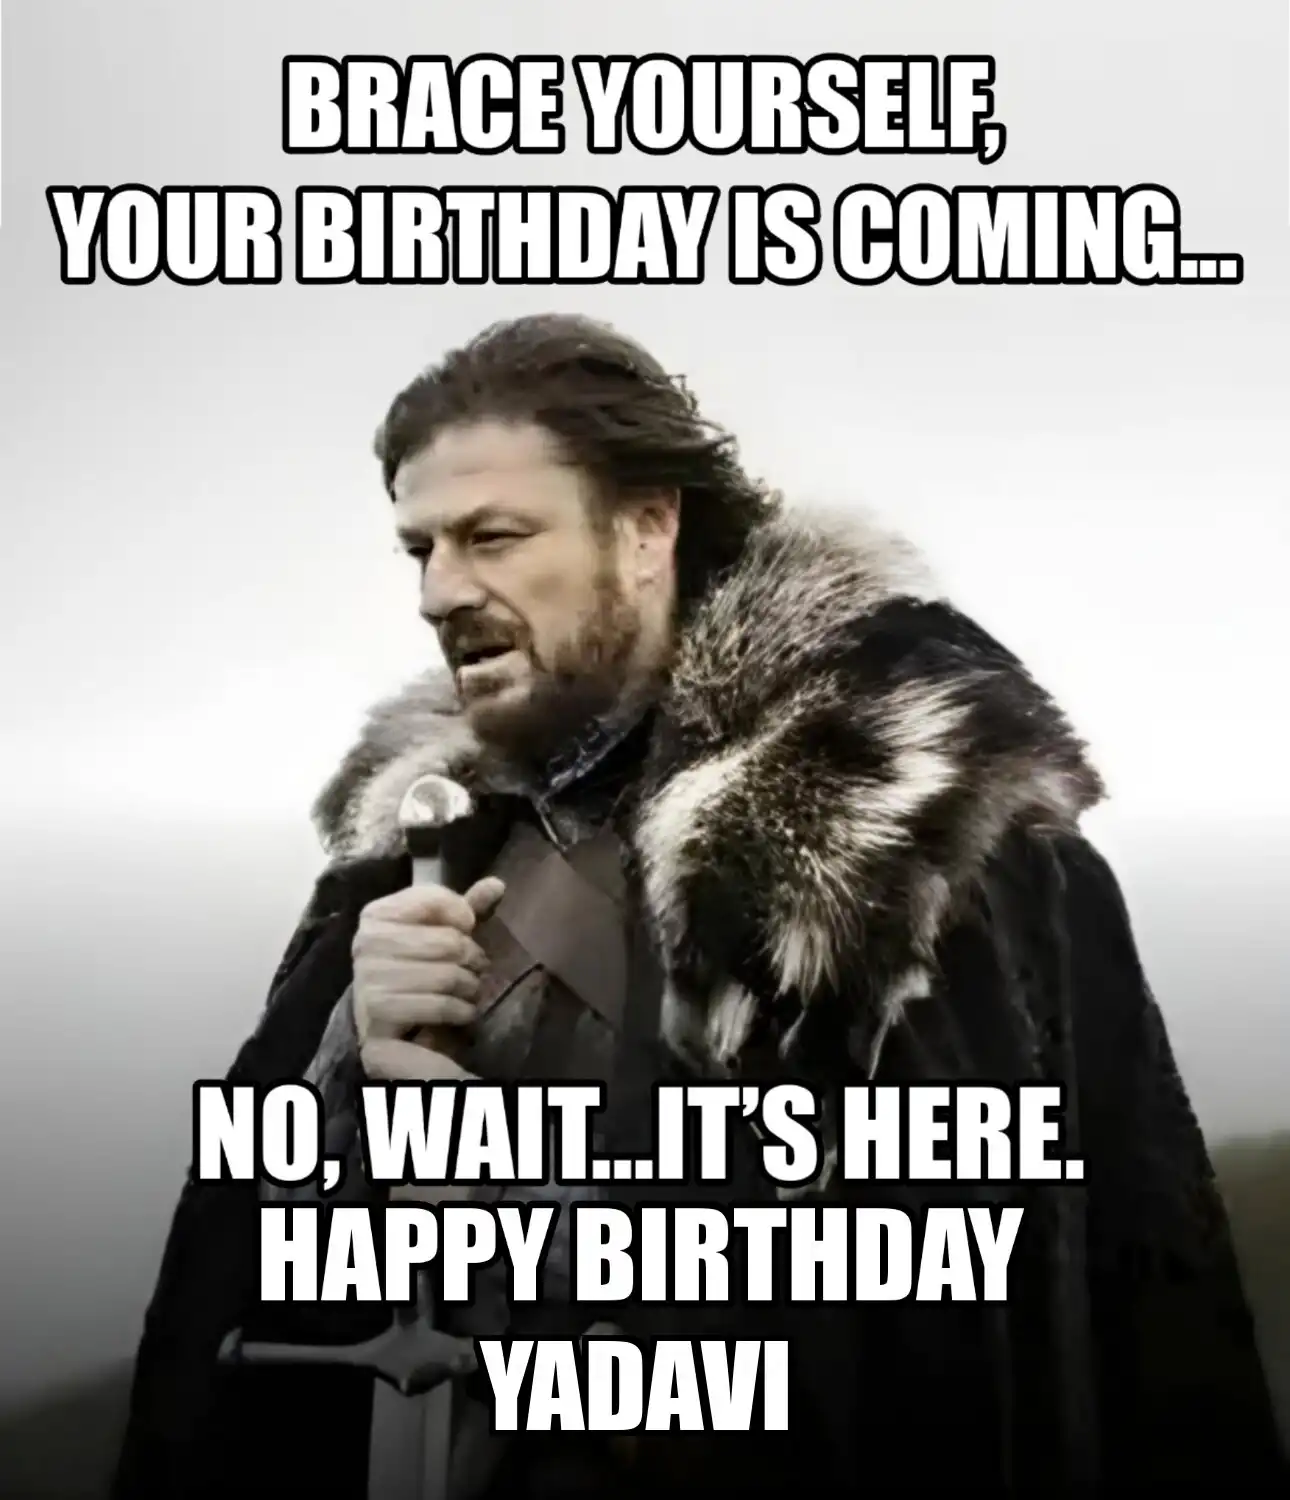 Happy Birthday Yadavi Brace Yourself Your Birthday Is Coming Meme